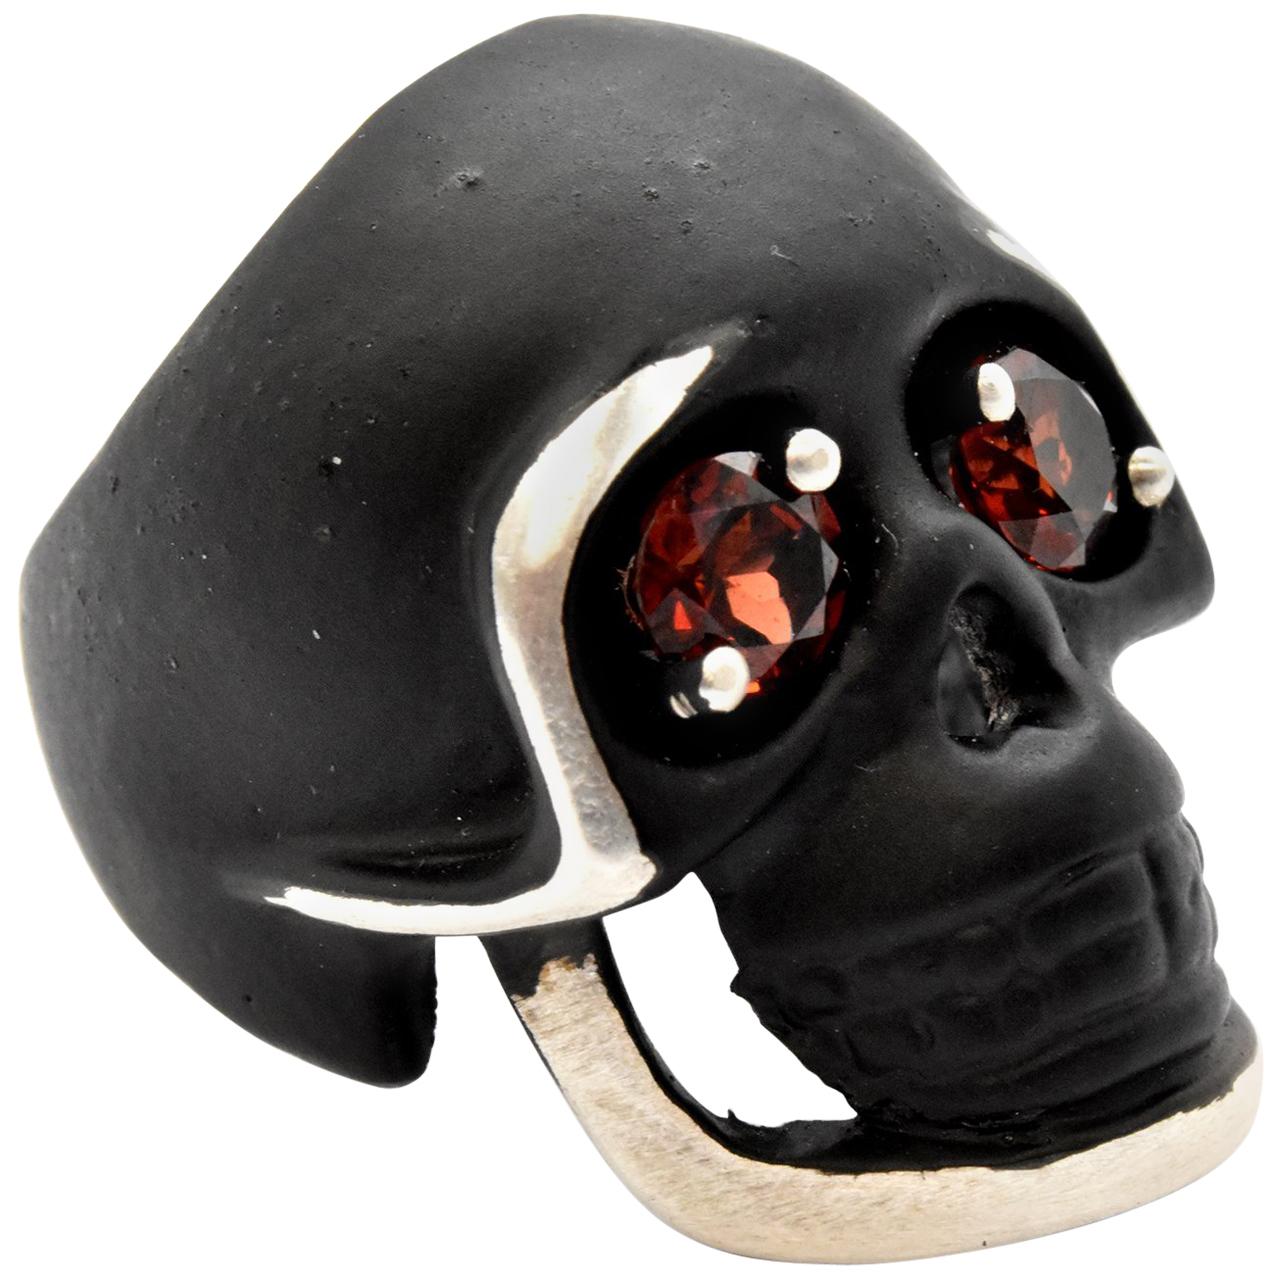 Black Coated Sterling Silver Skull Ring with Garnet Eyes